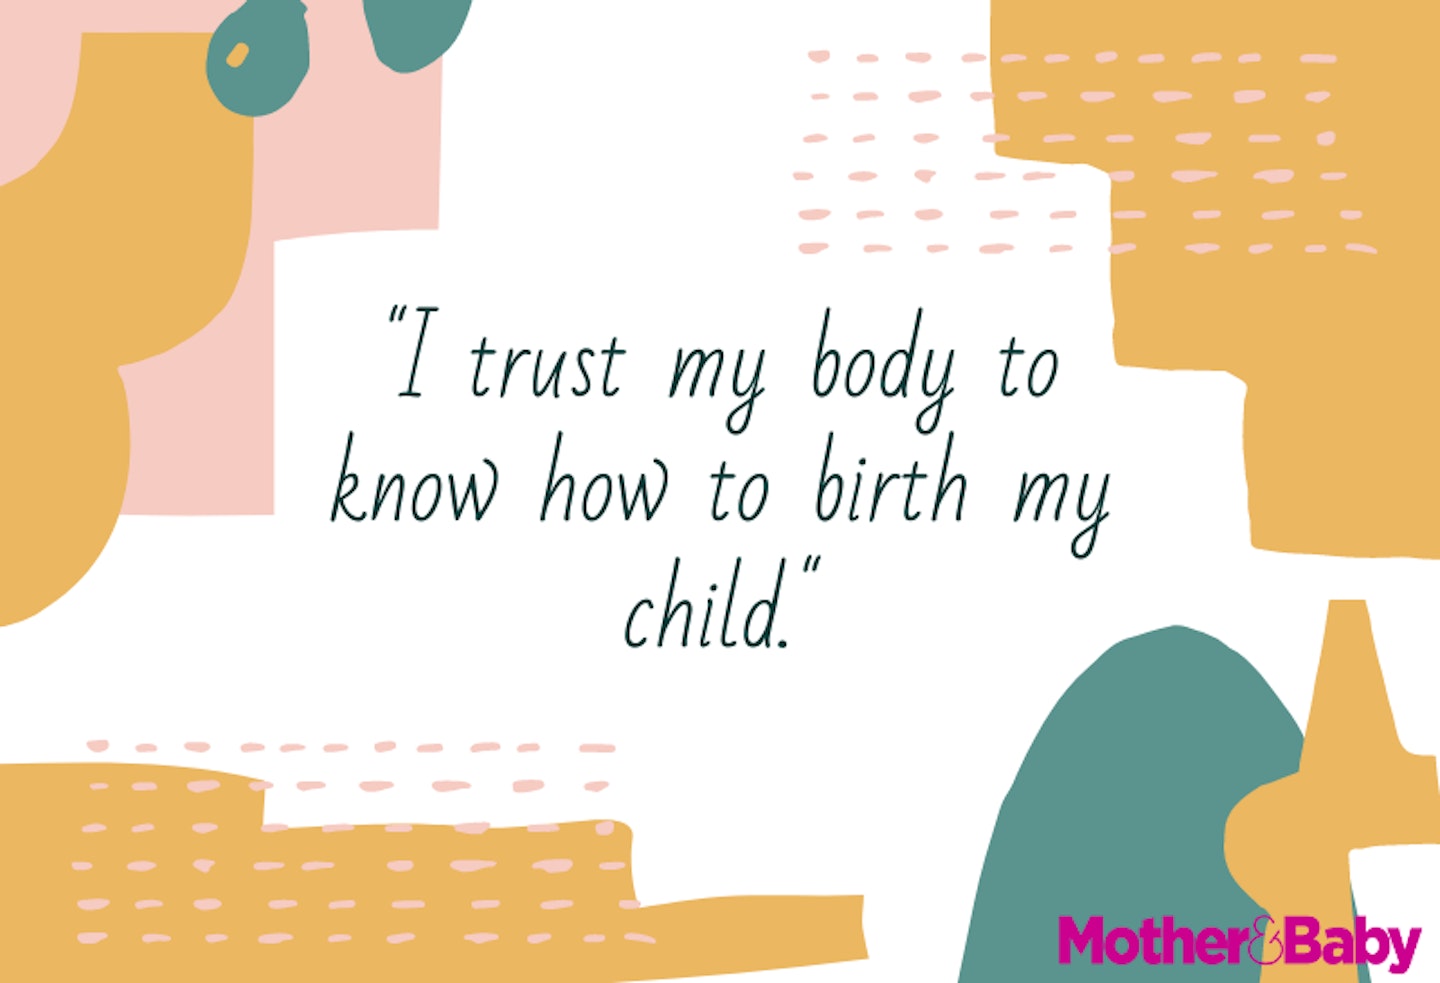 I trust my body to know how to birth my child